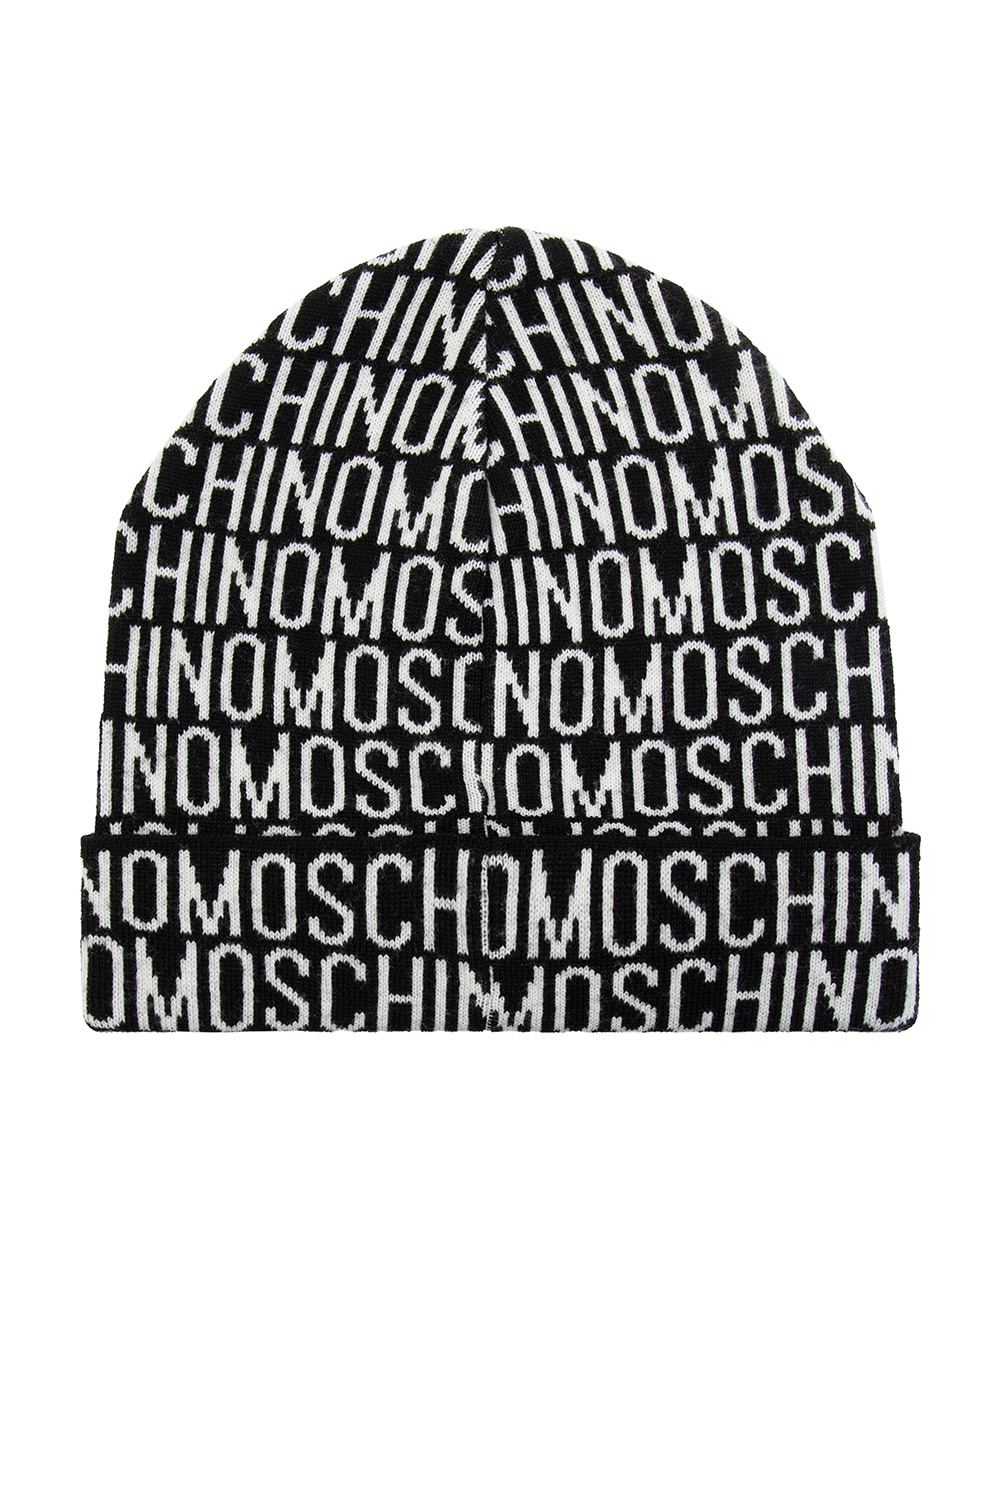 Moschino clothing s key-chains caps box